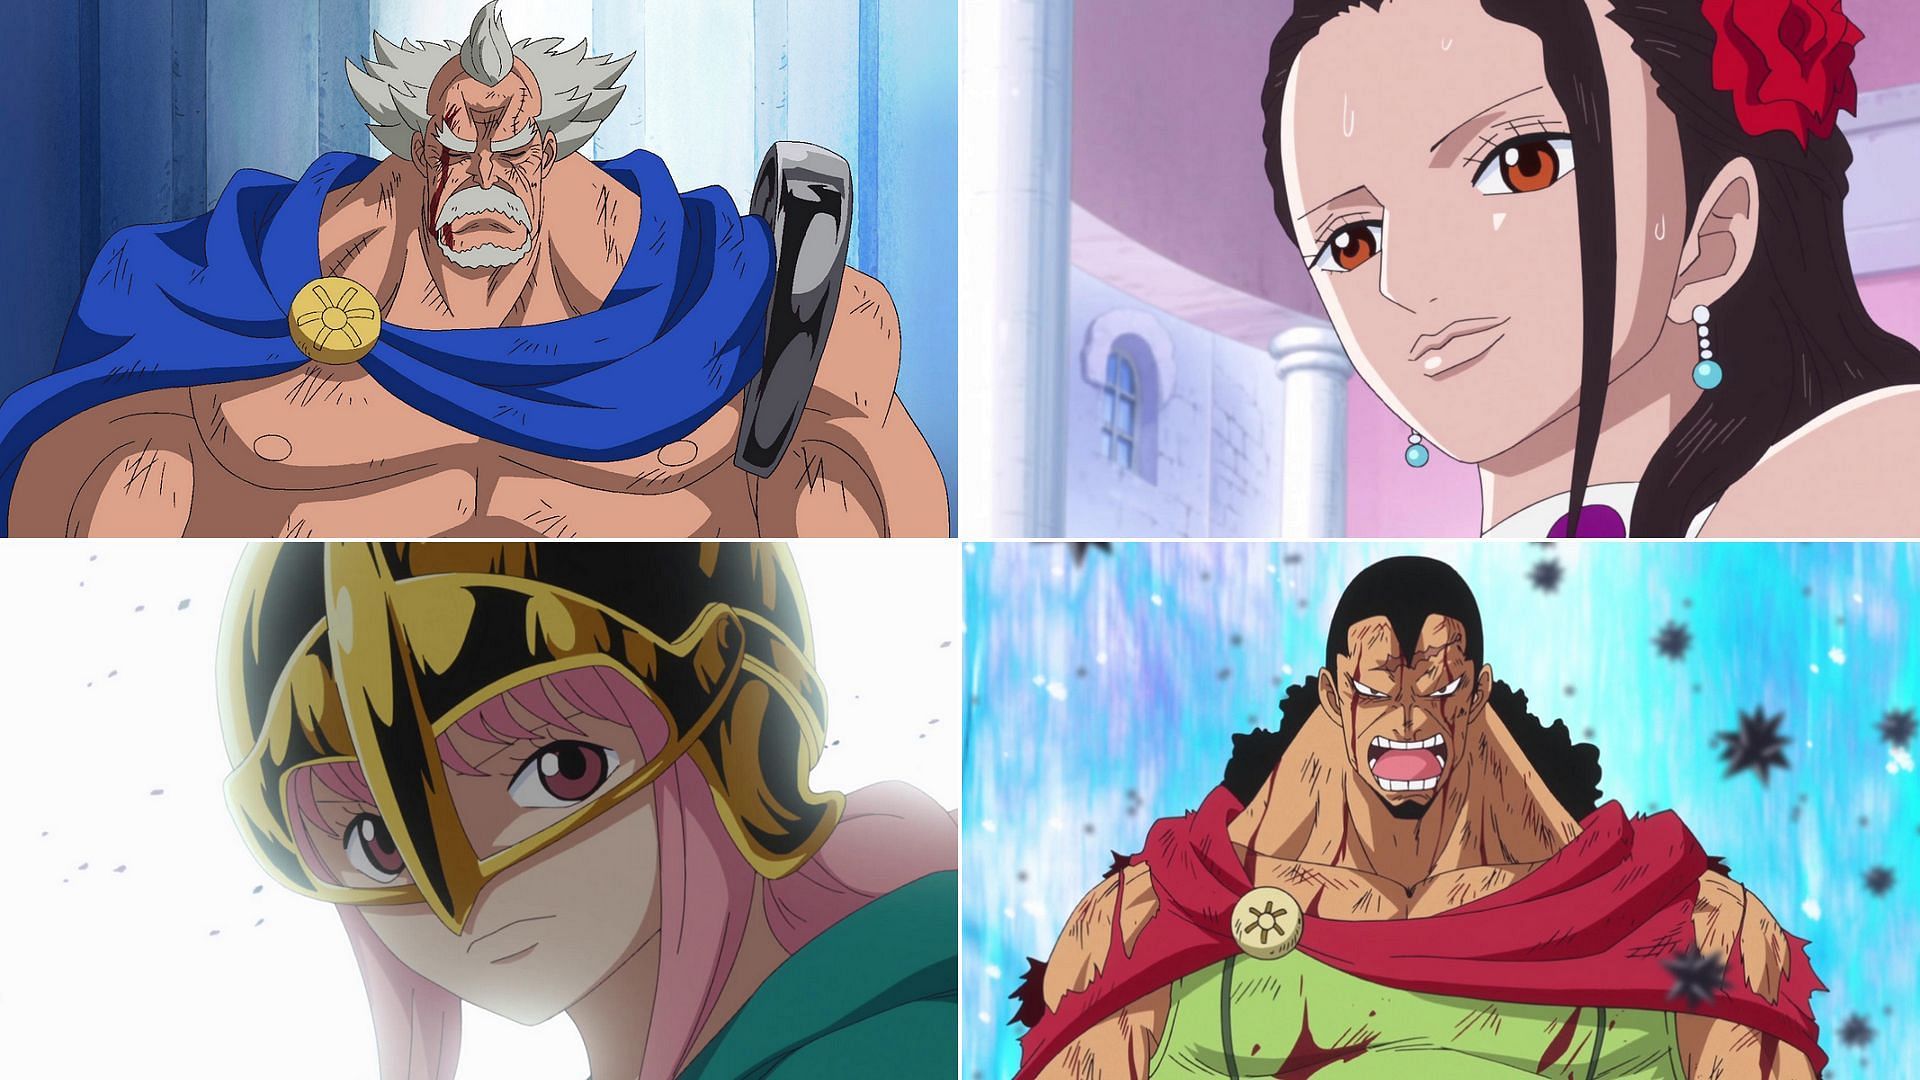 The Riku Family in One Piece (Image via Toei Animation, One Piece)